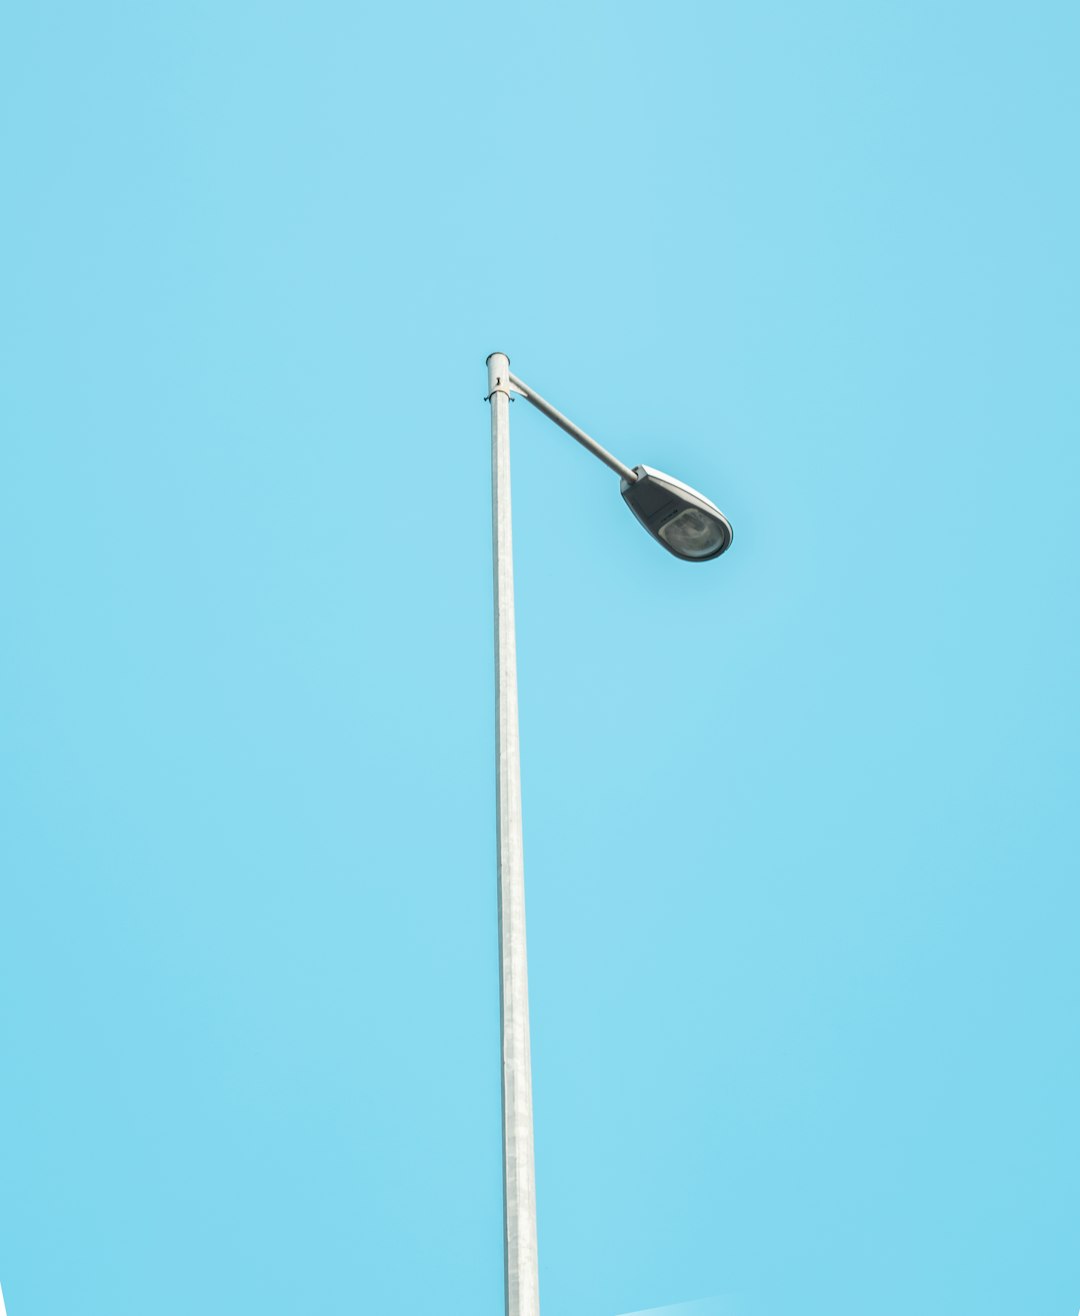 black street light under blue sky during daytime